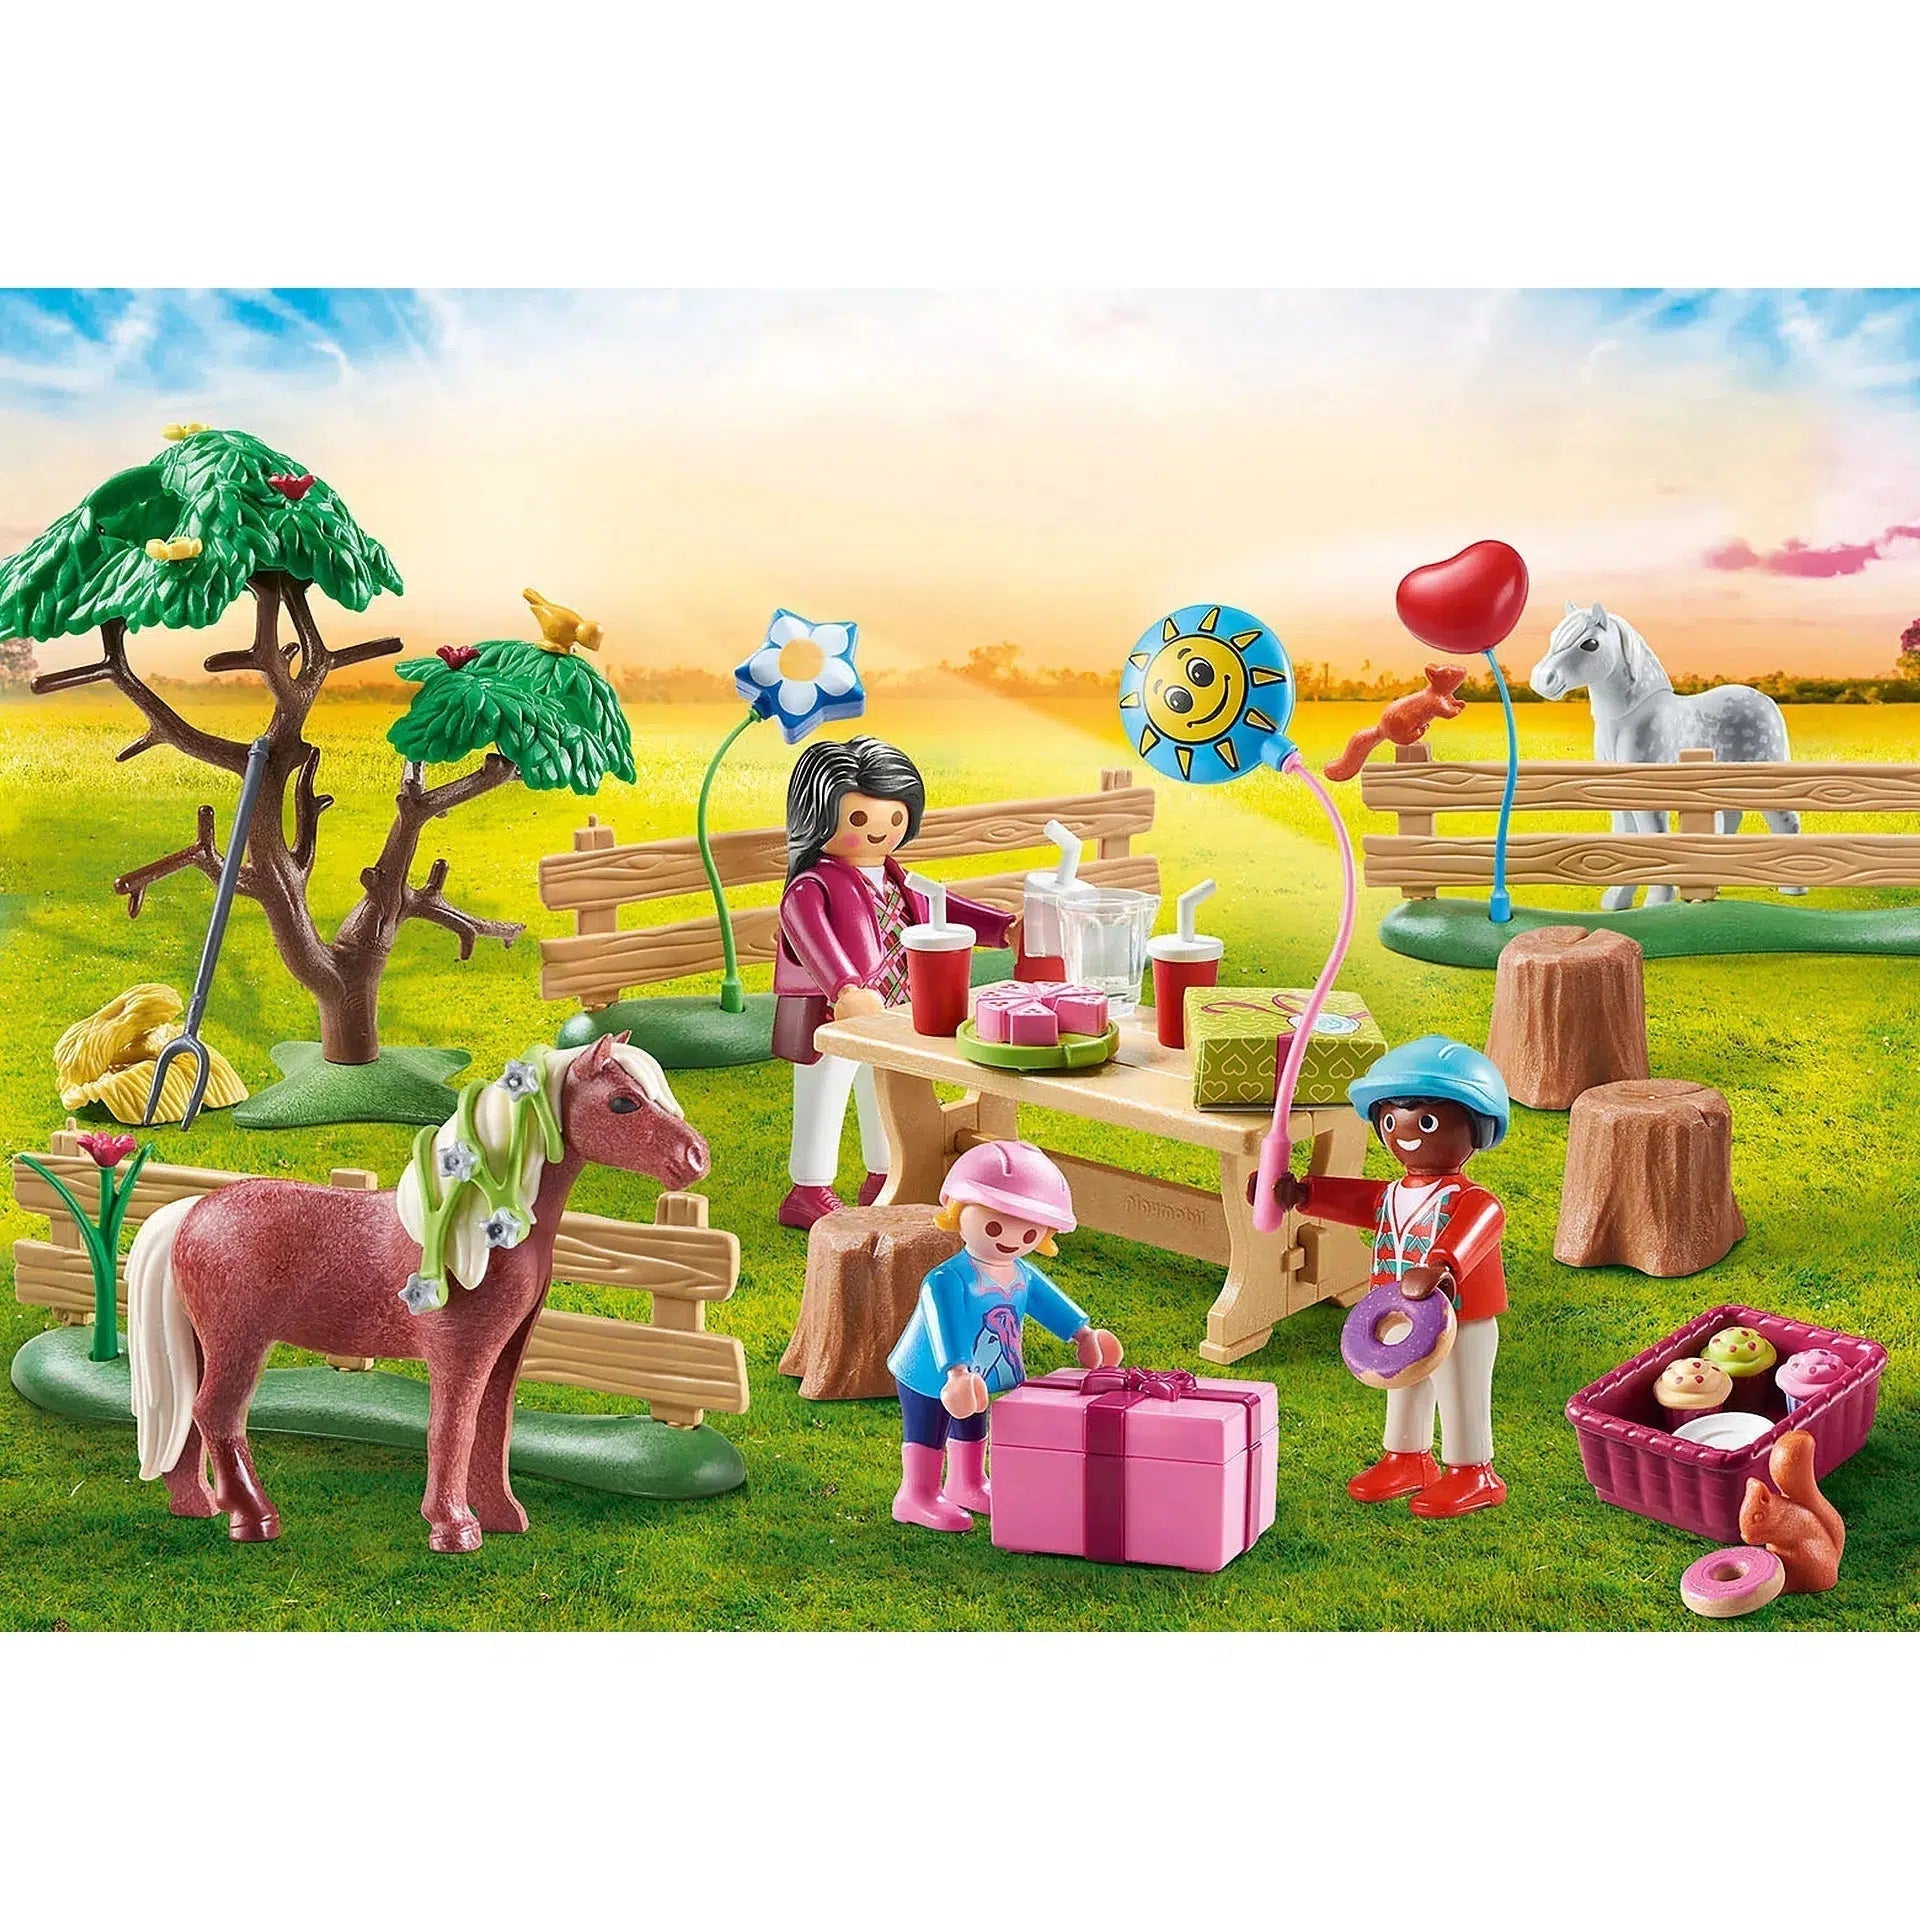 Playmobil-Country - Pony Farm Birthday Party-70997-Legacy Toys